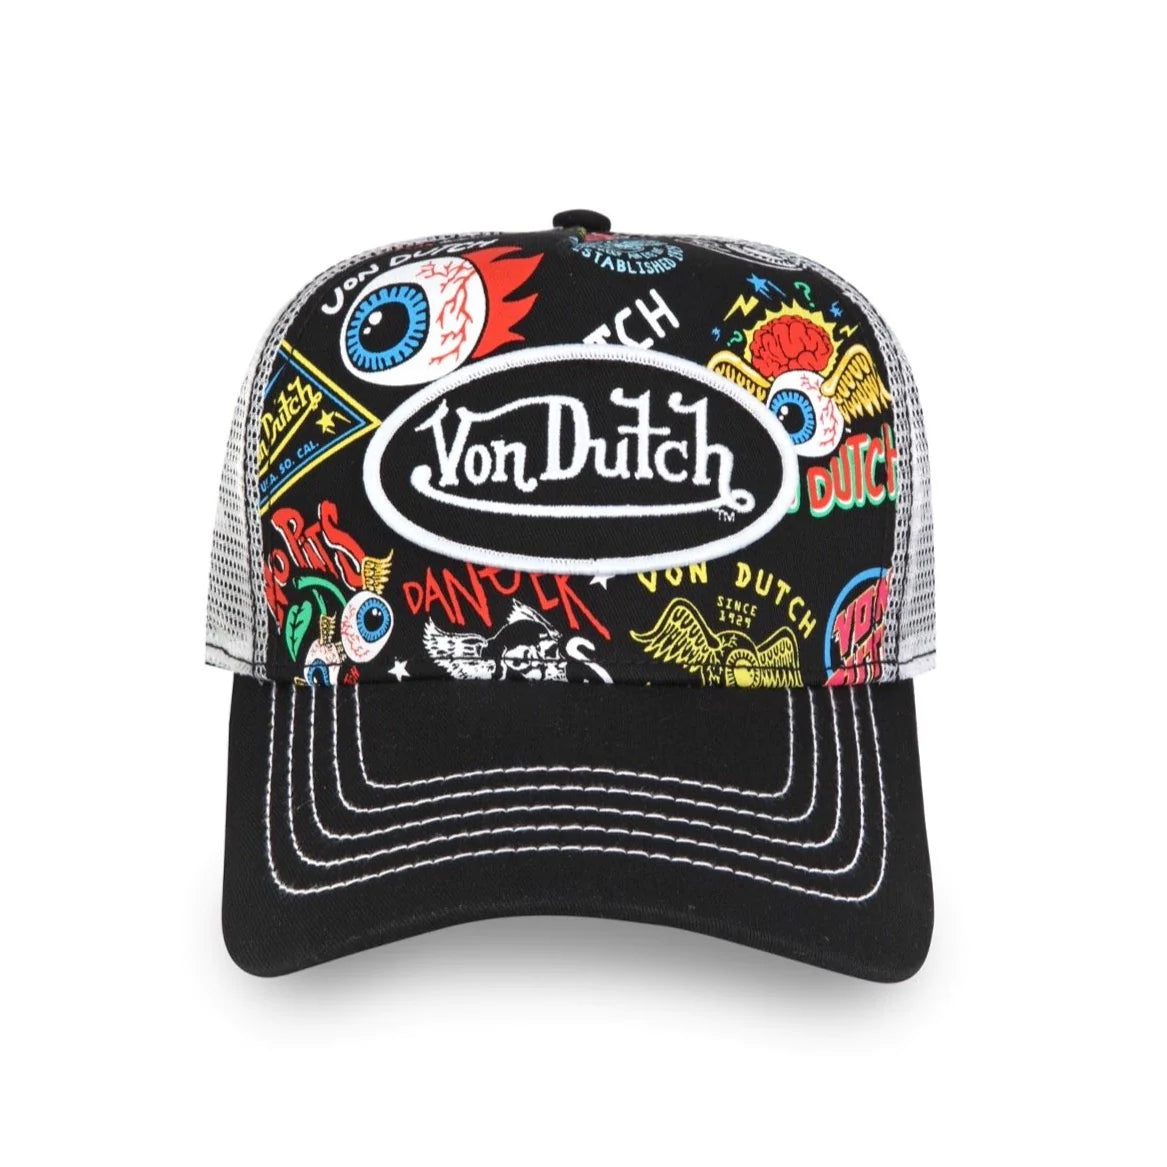 Classic Snapback Trucker Hat by Von Dutch features Jax All-over print